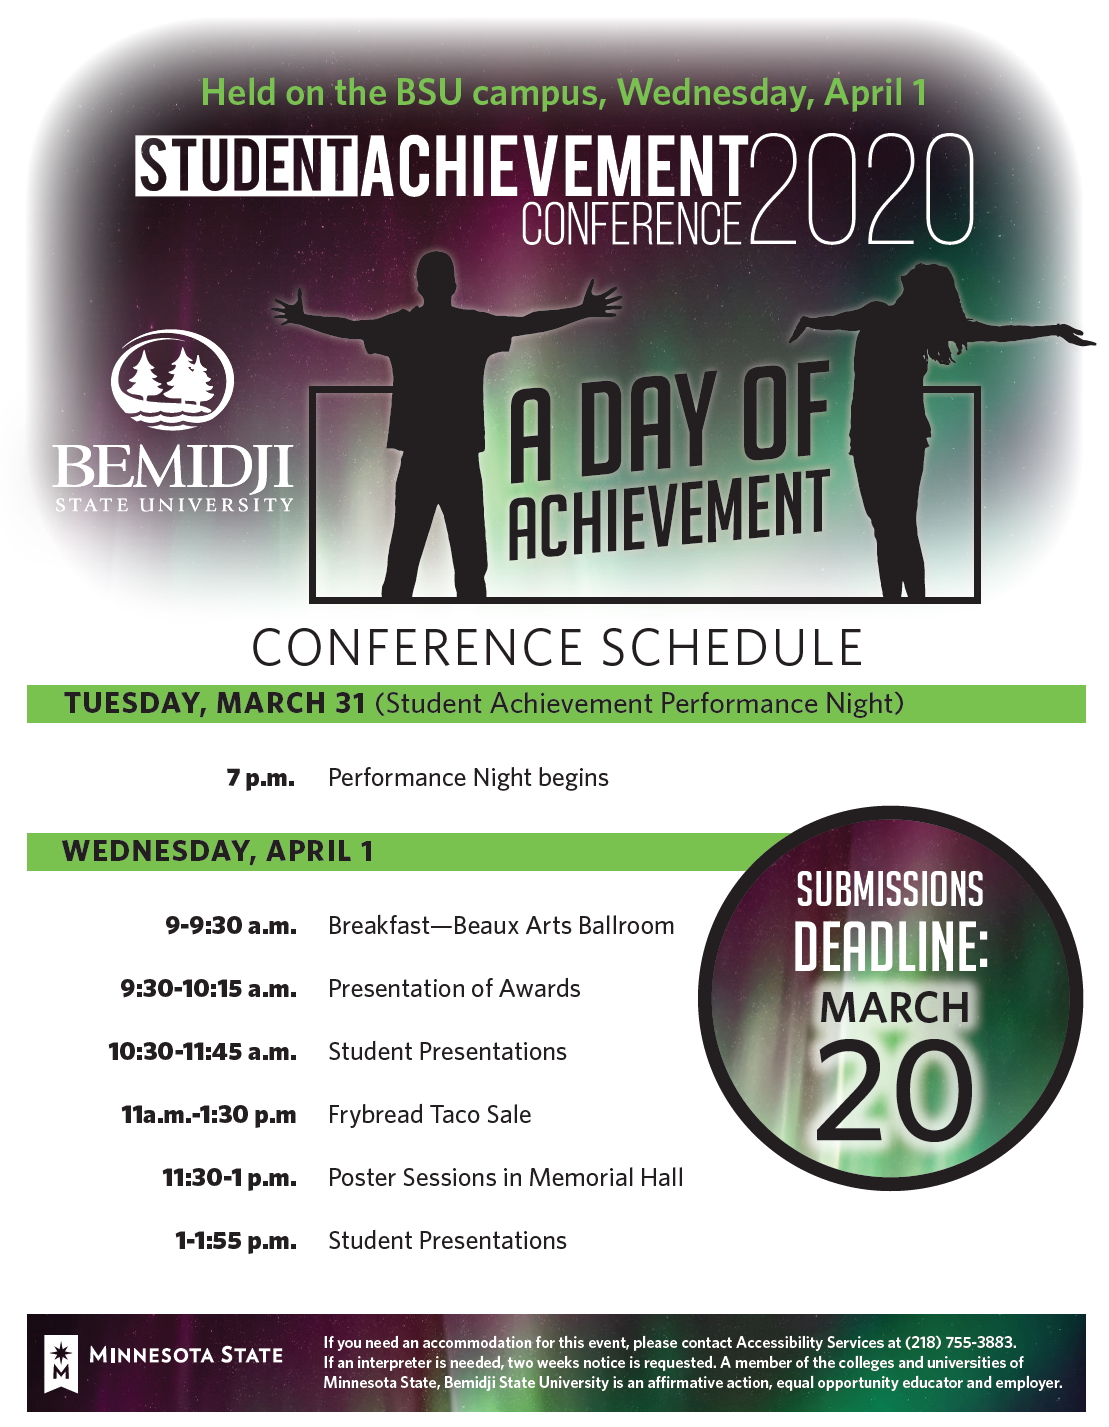 Student Achievement Conference 2020 flyer